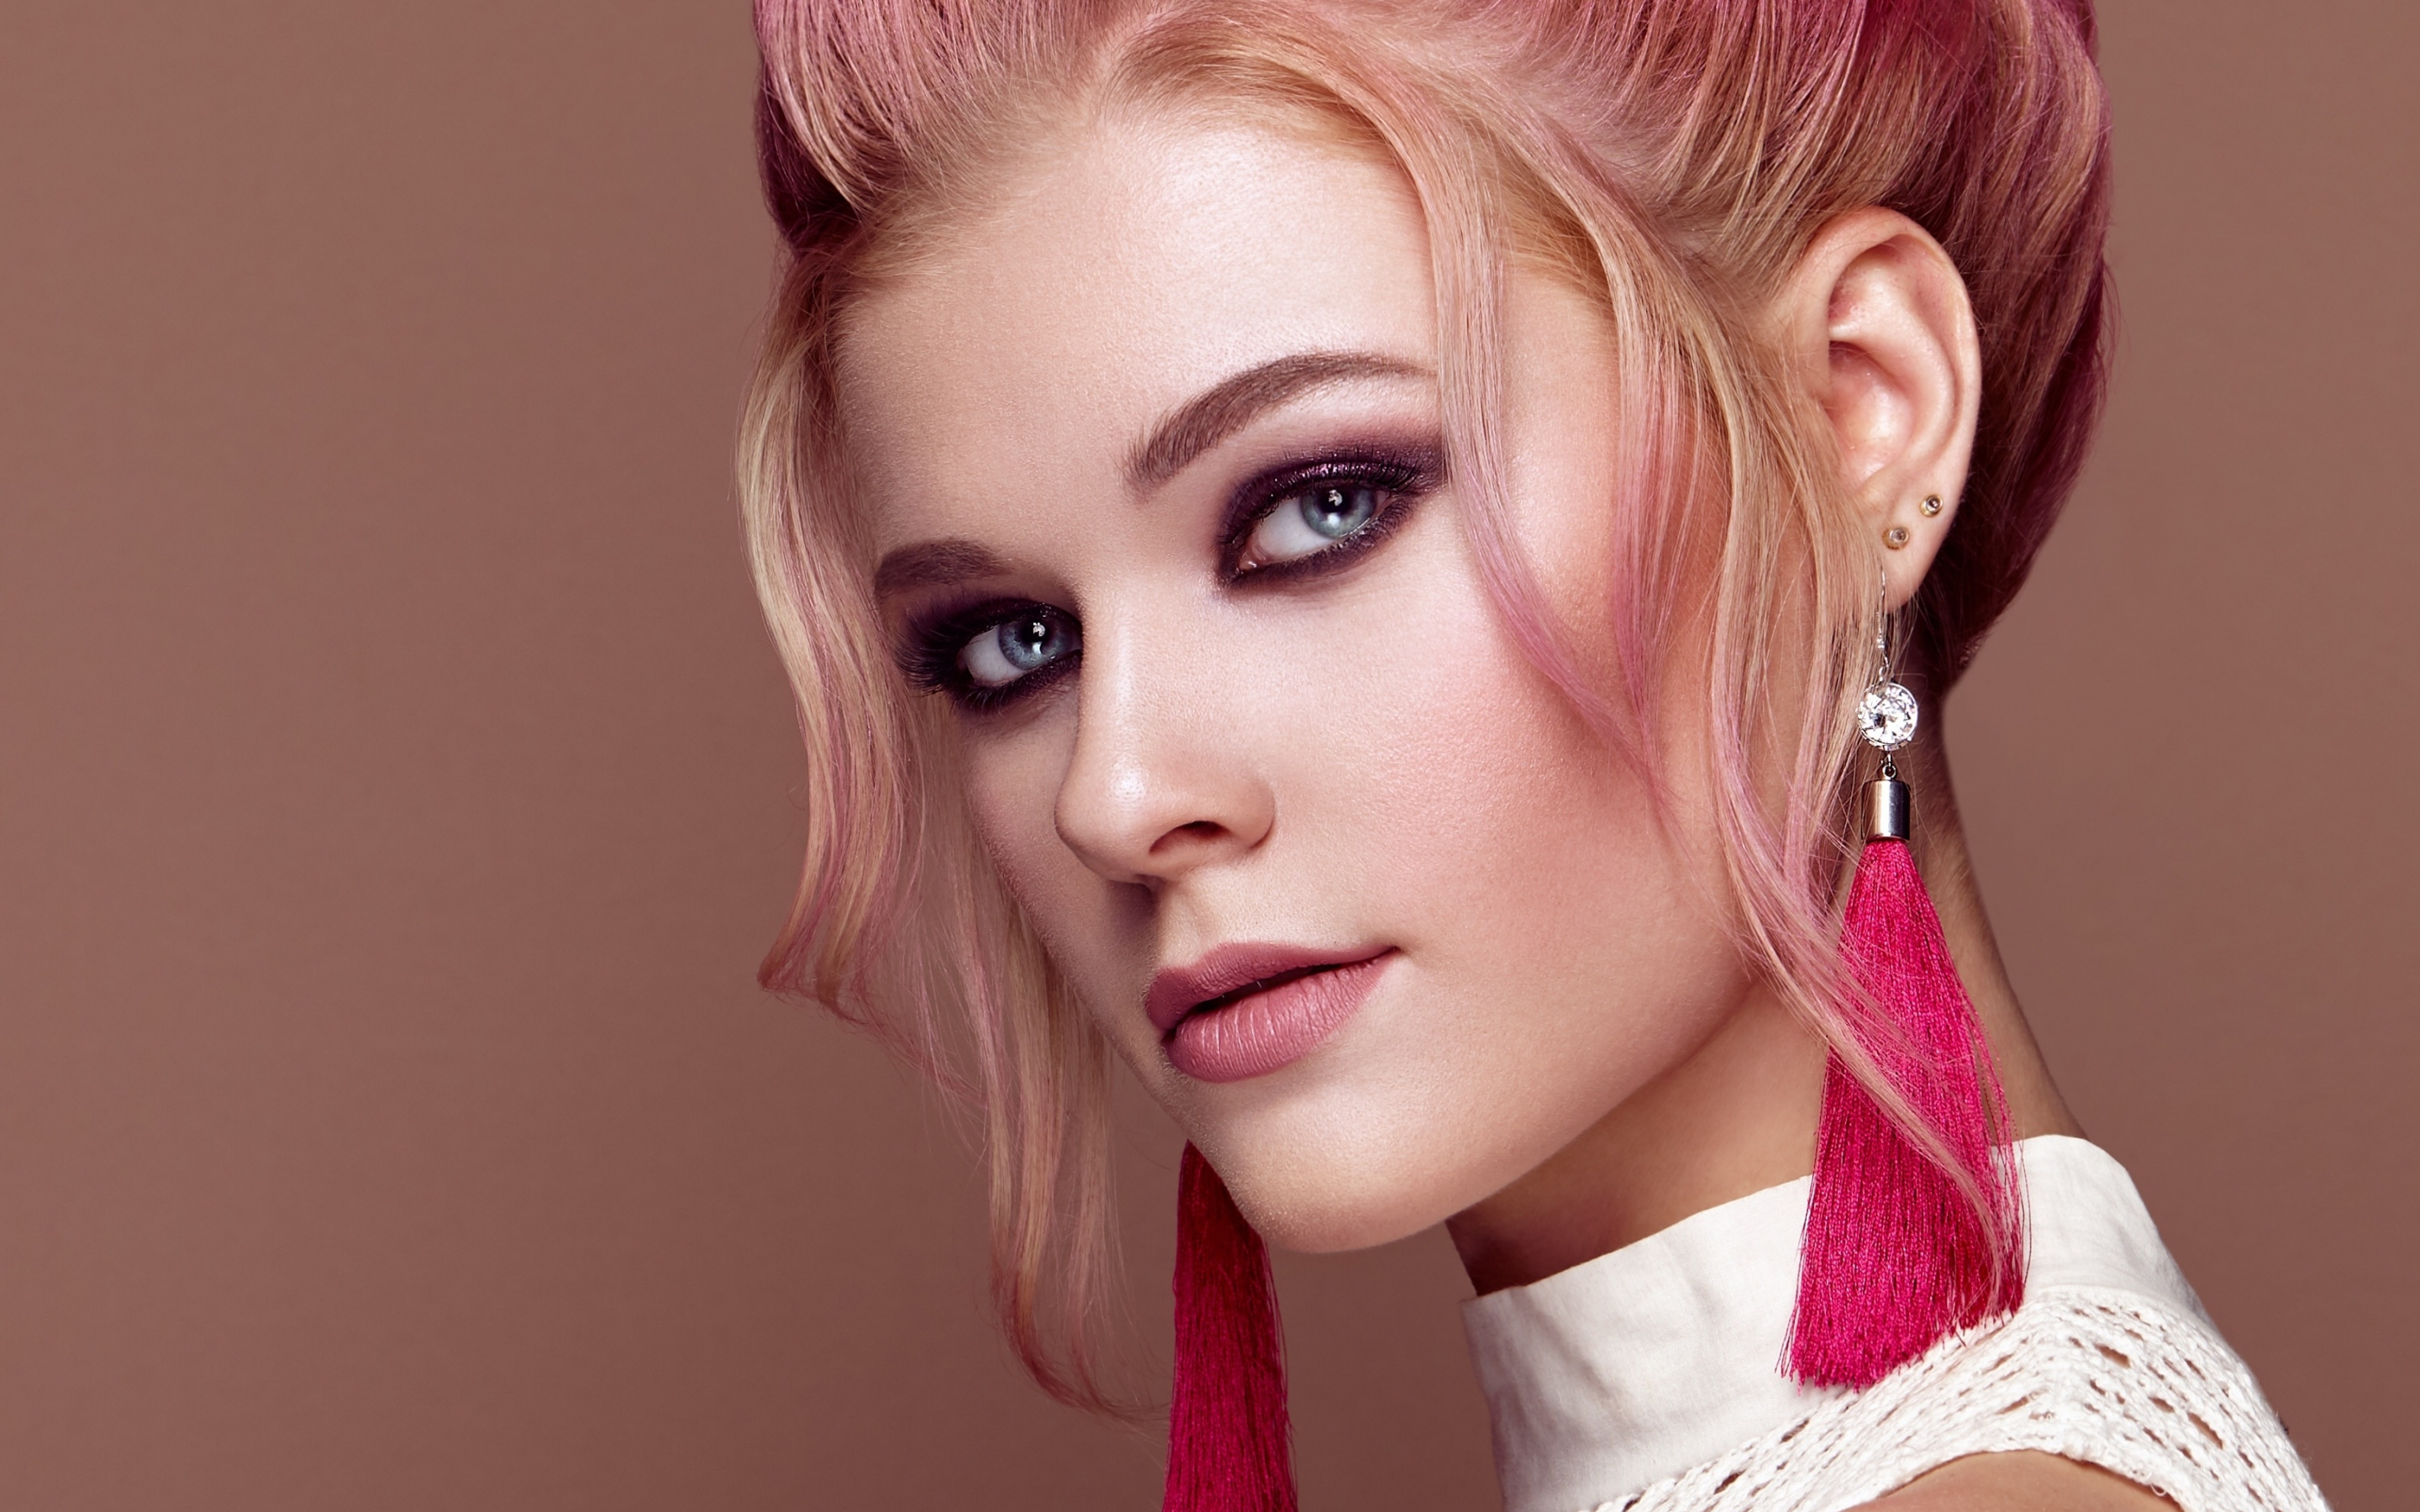 Makeup, gorgeous woman, colorful hairs, model, 2880x1800 wallpaper